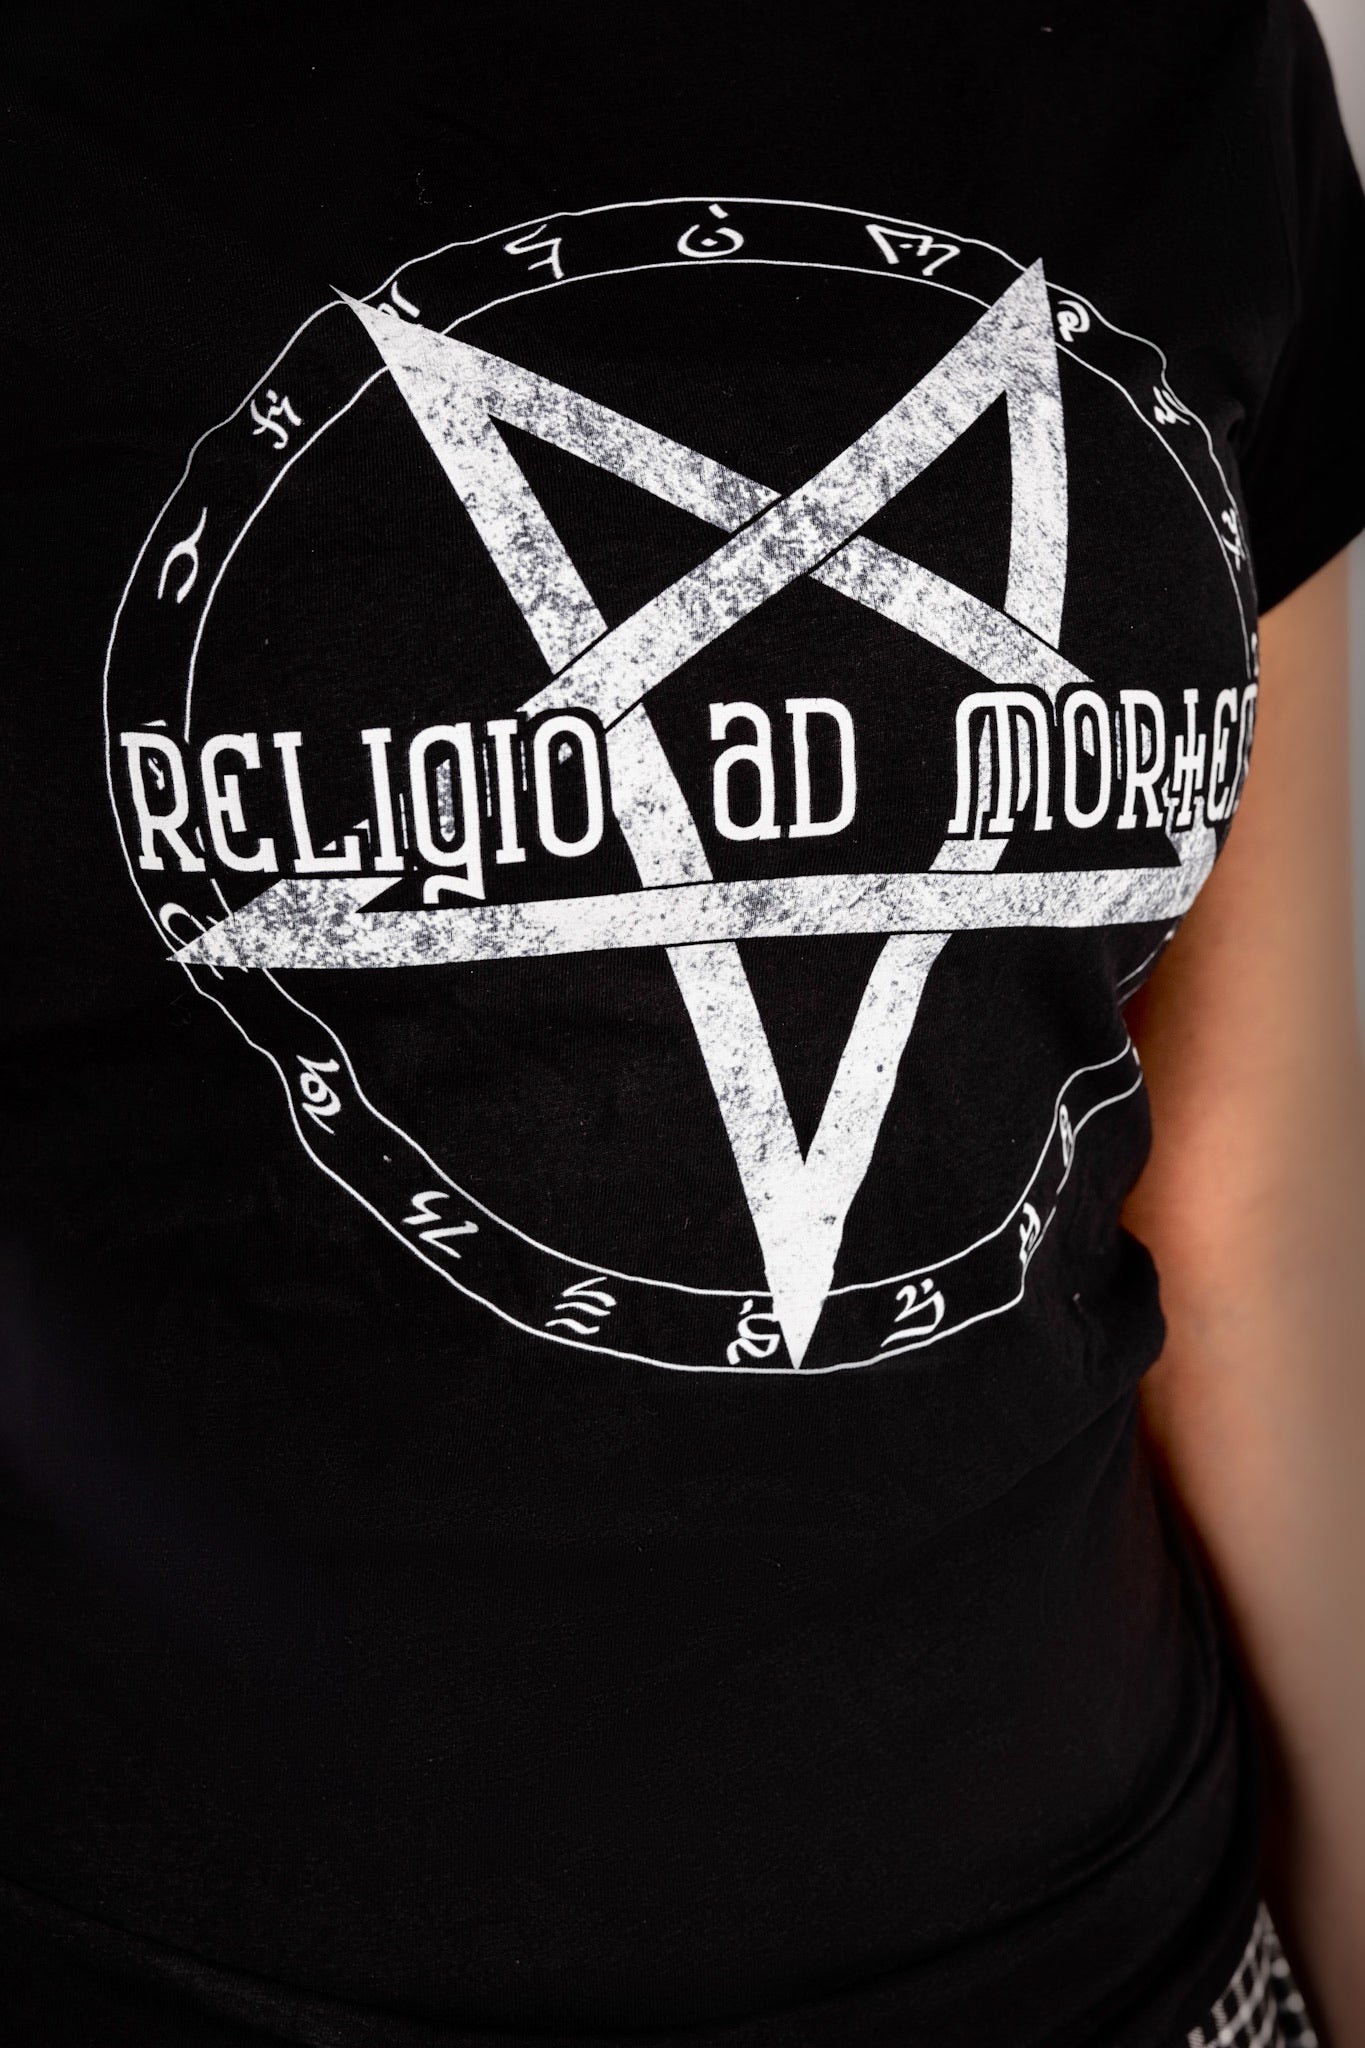 Death to religion